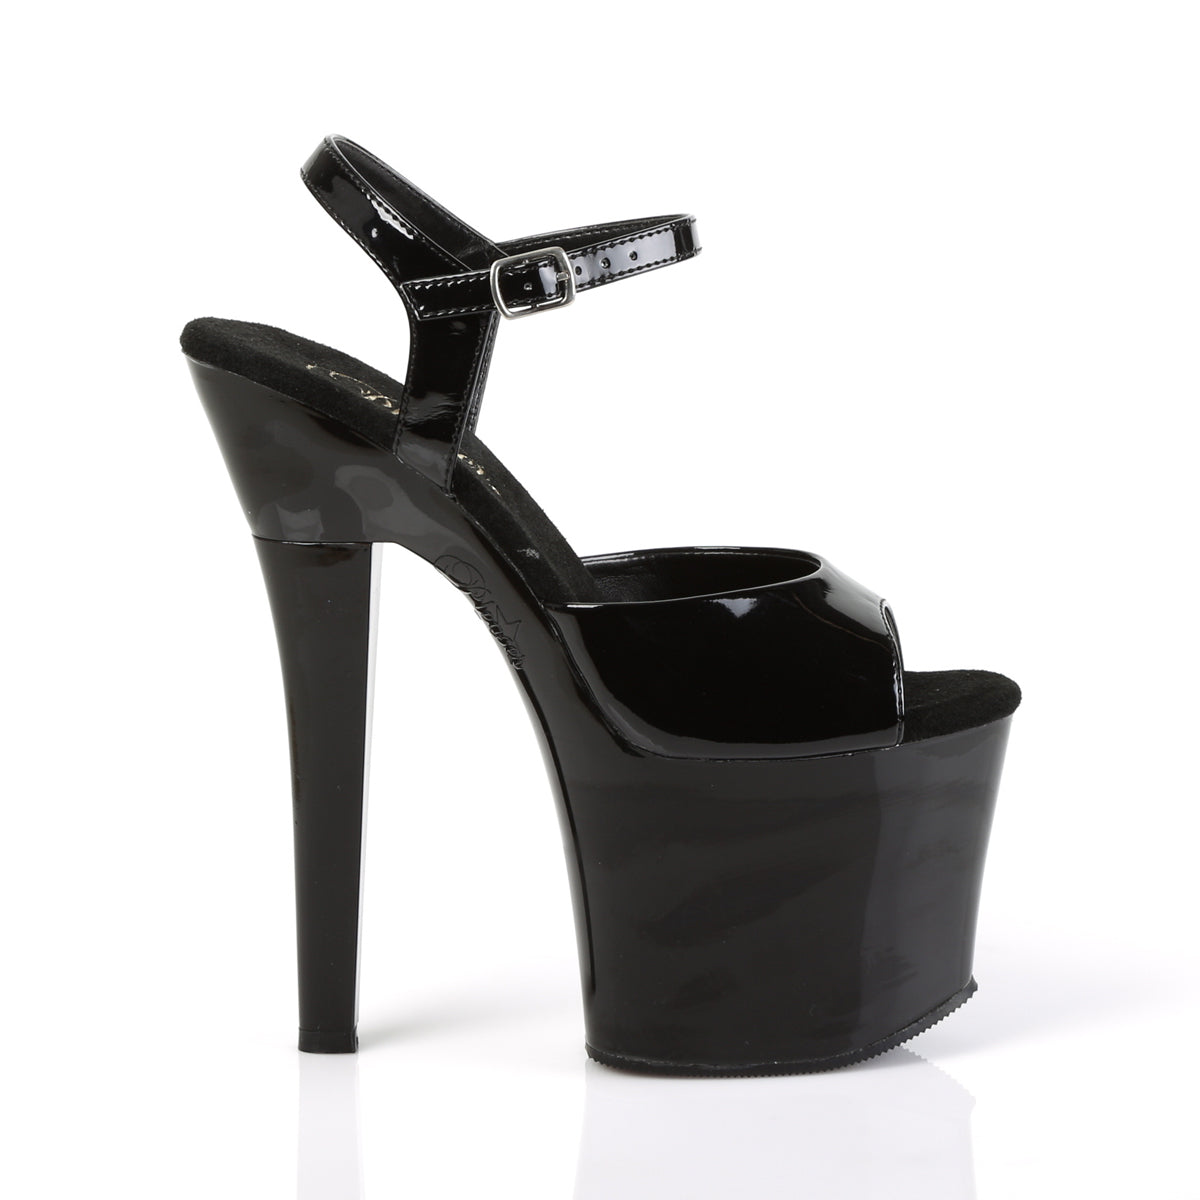 RADIANT-709 7" Heel Black Patent Pole Dancing Platforms-Pleaser- Sexy Shoes Fetish Heels